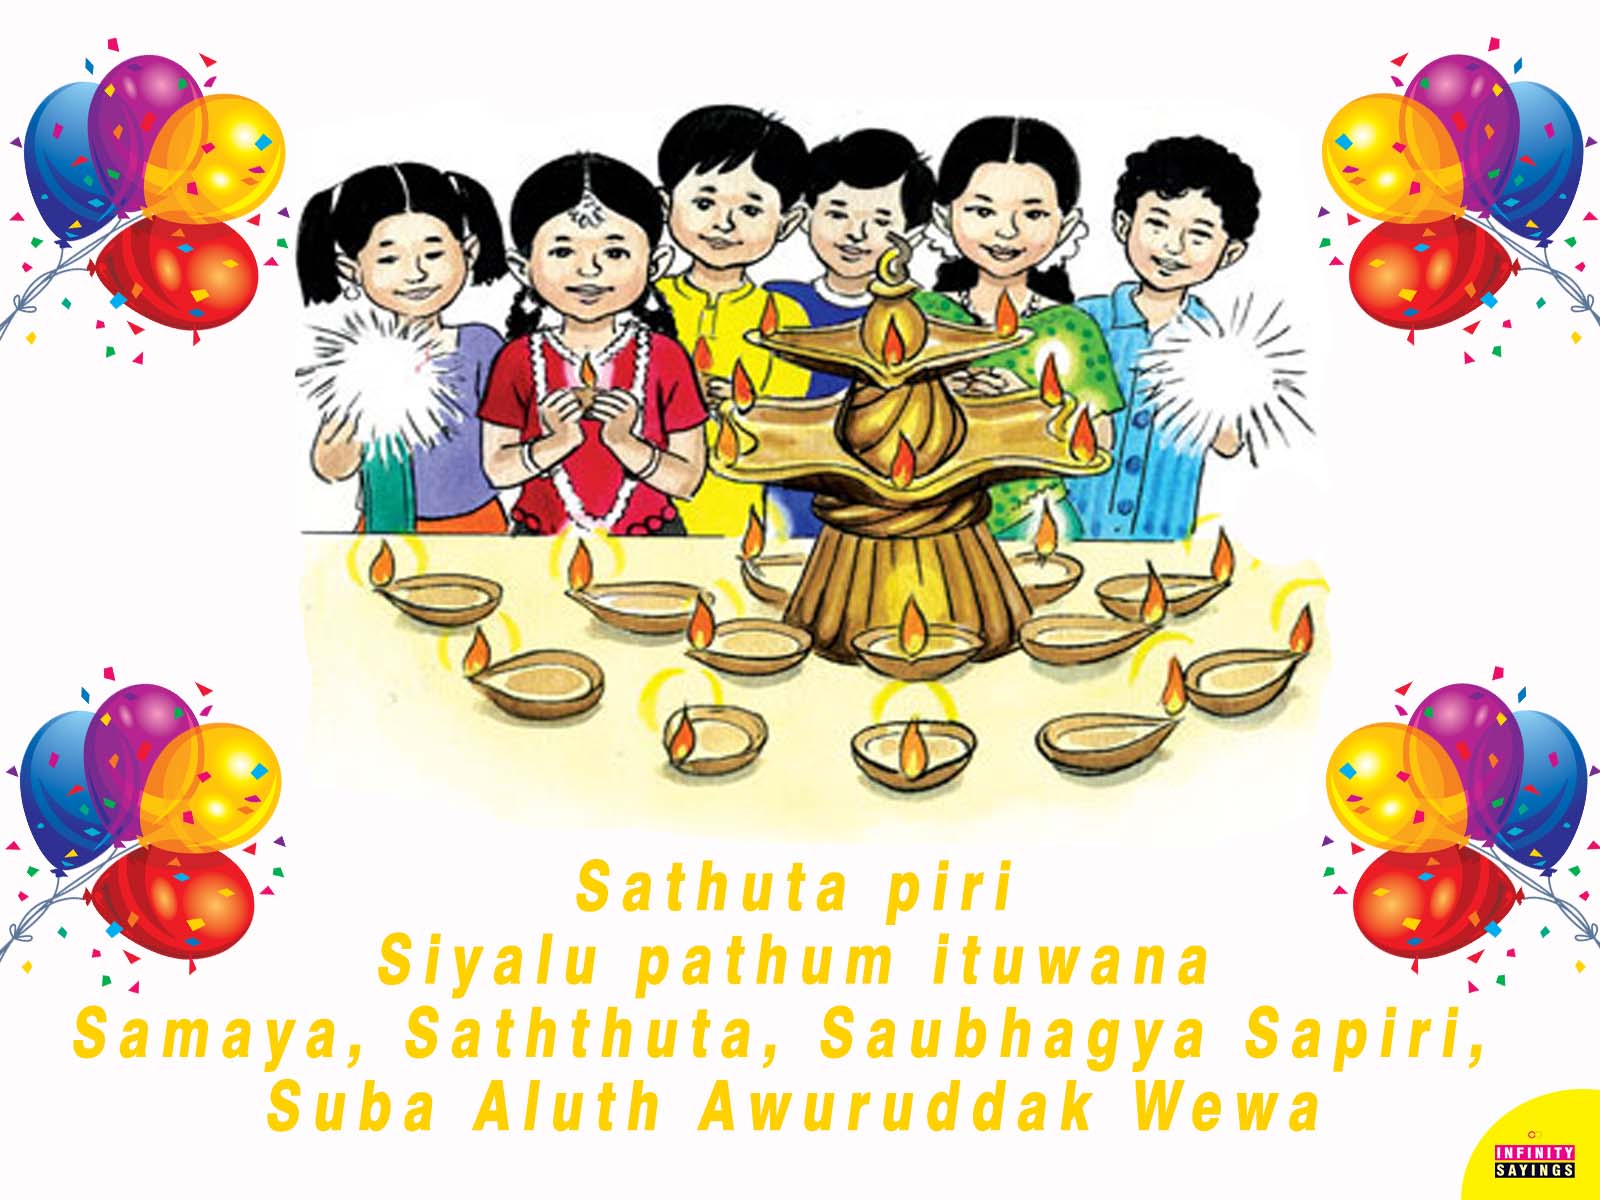 Sinhala & Tamil New Year Greetings Cards - Suba Aluth Awuruddak Wewa 2019 , HD Wallpaper & Backgrounds